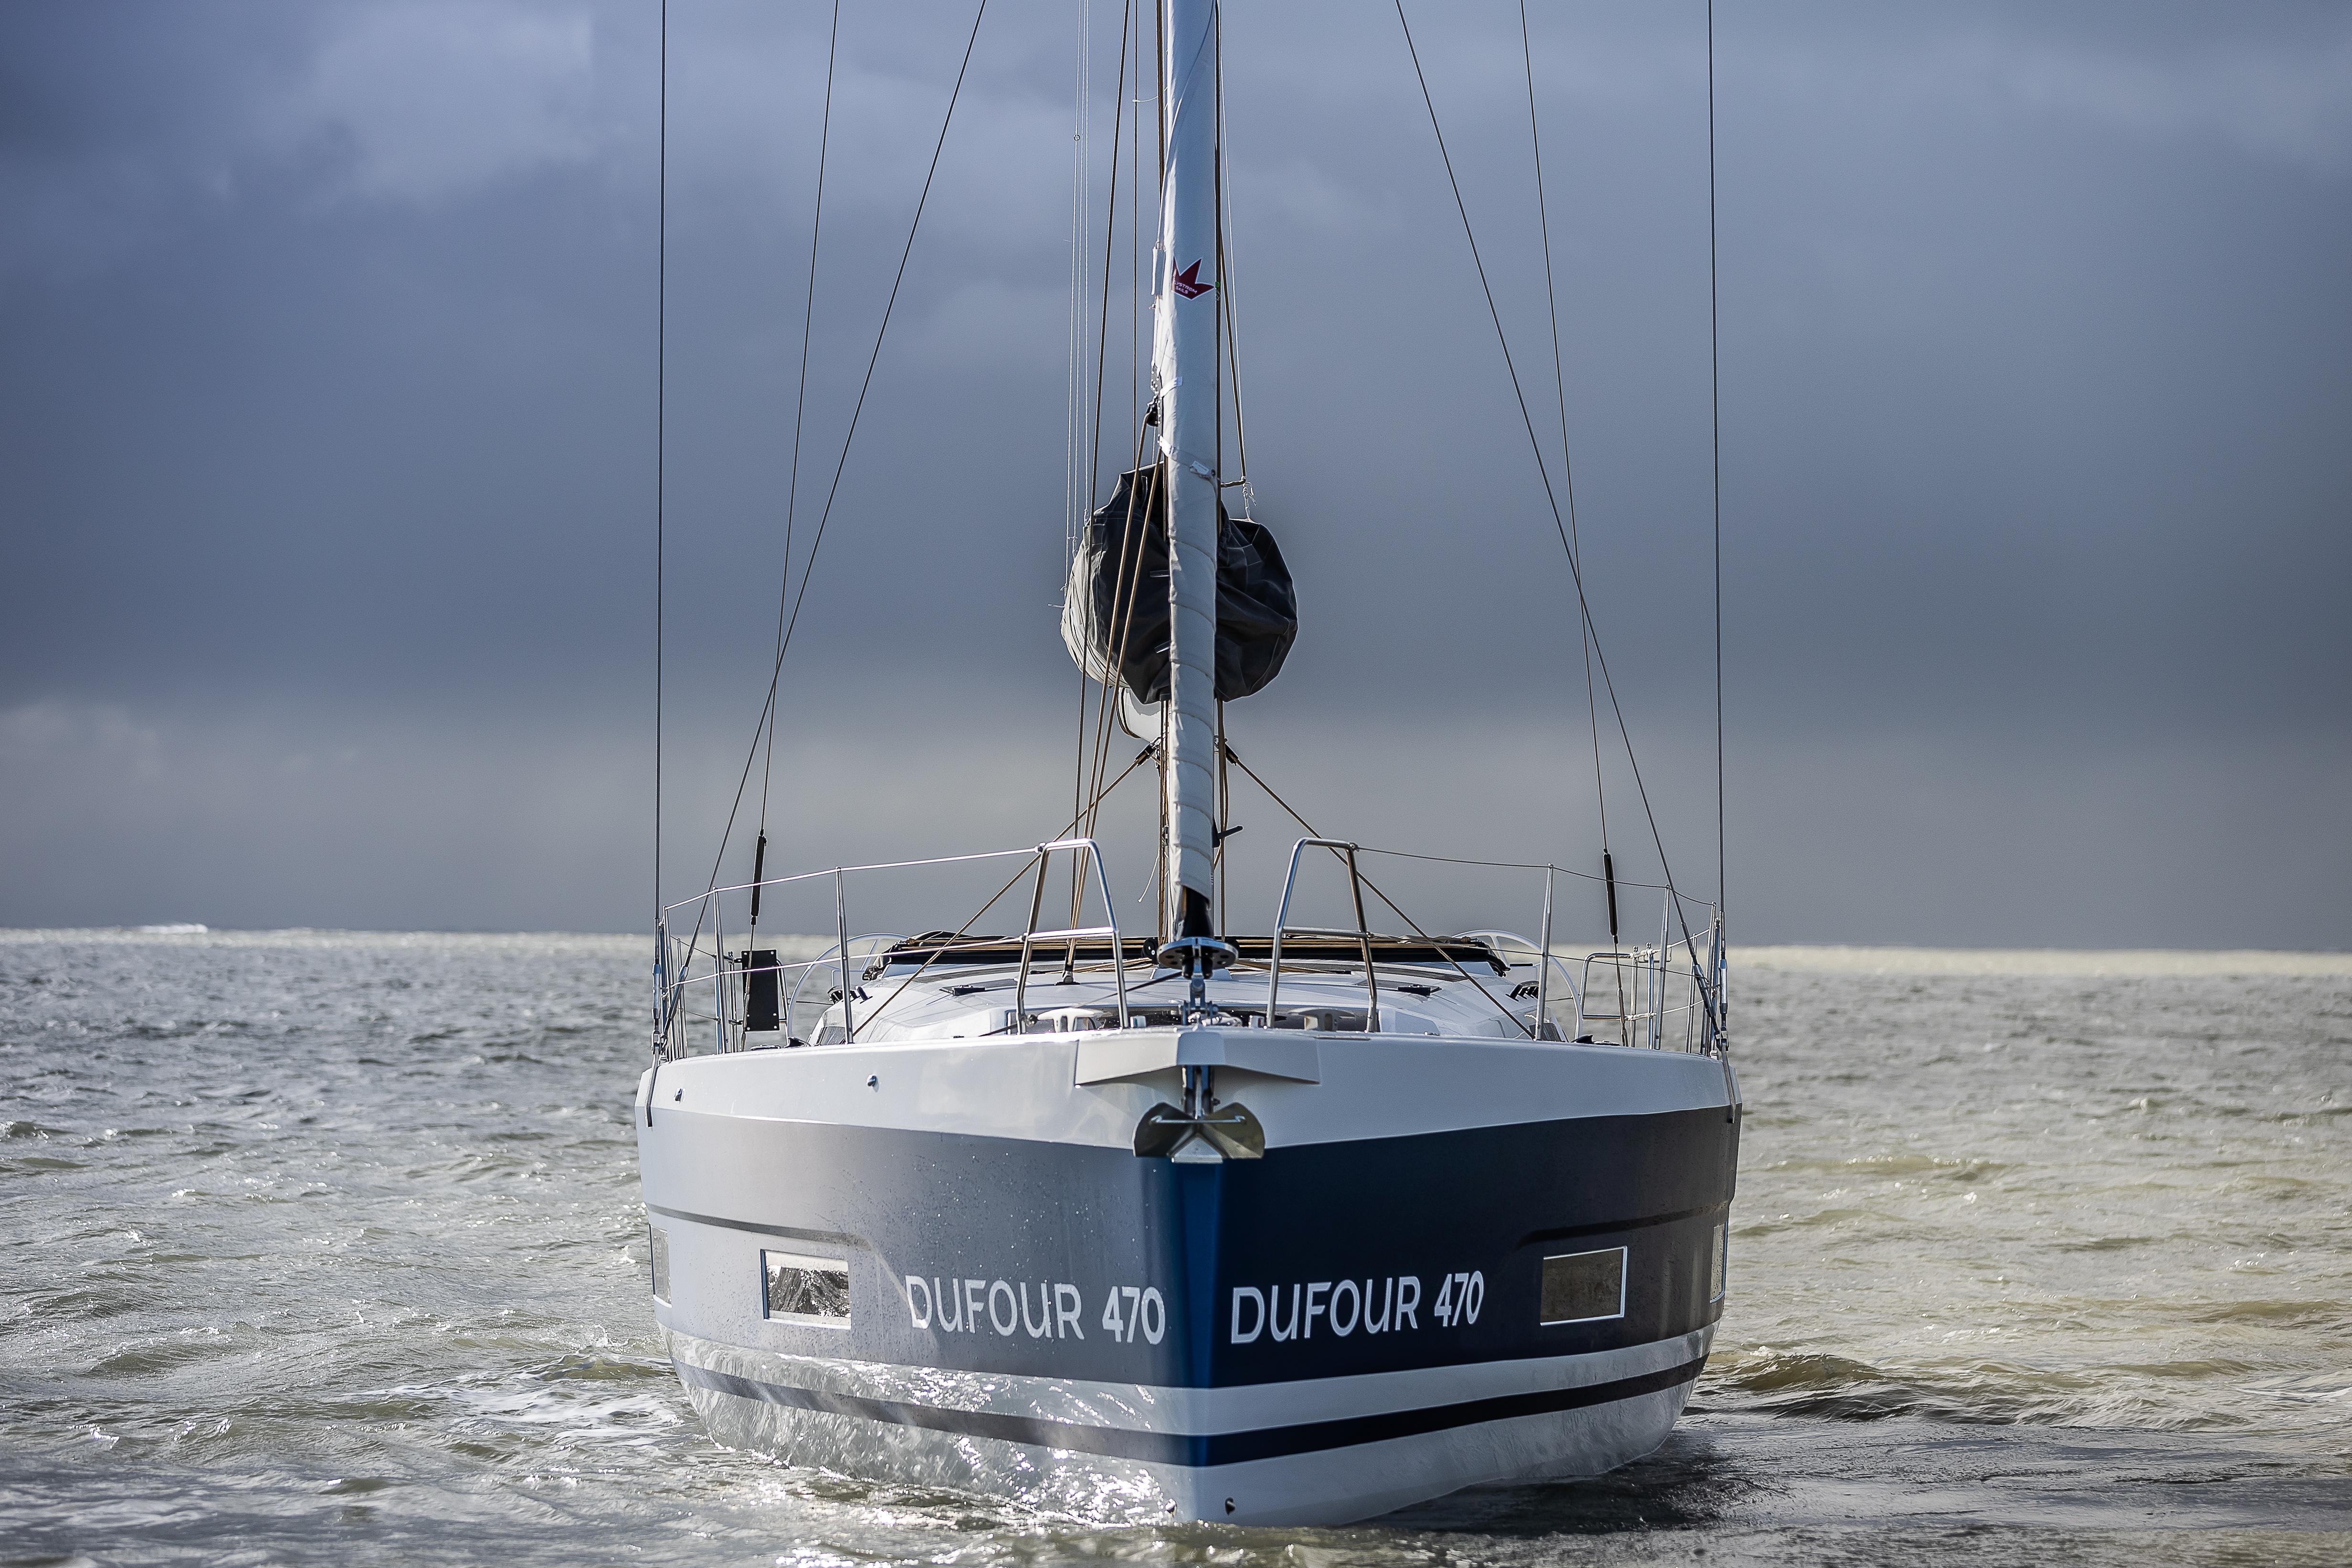 Dufour 47 sailboat